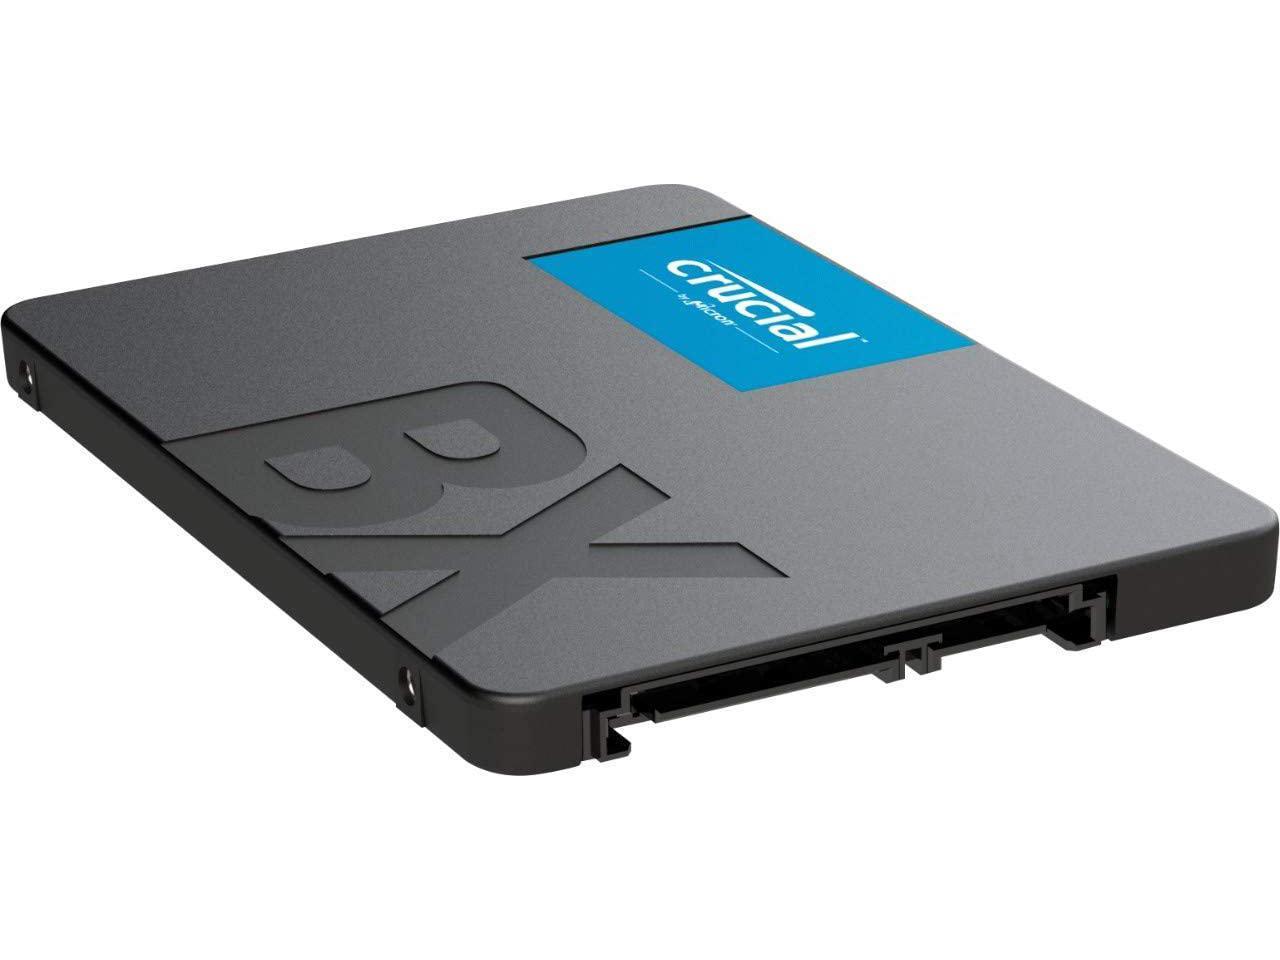 Crucial BX500 240GB 3D NAND SATA 2.5-Inch Internal SSD, up to 540 MB/s -  CT240BX500SSD1